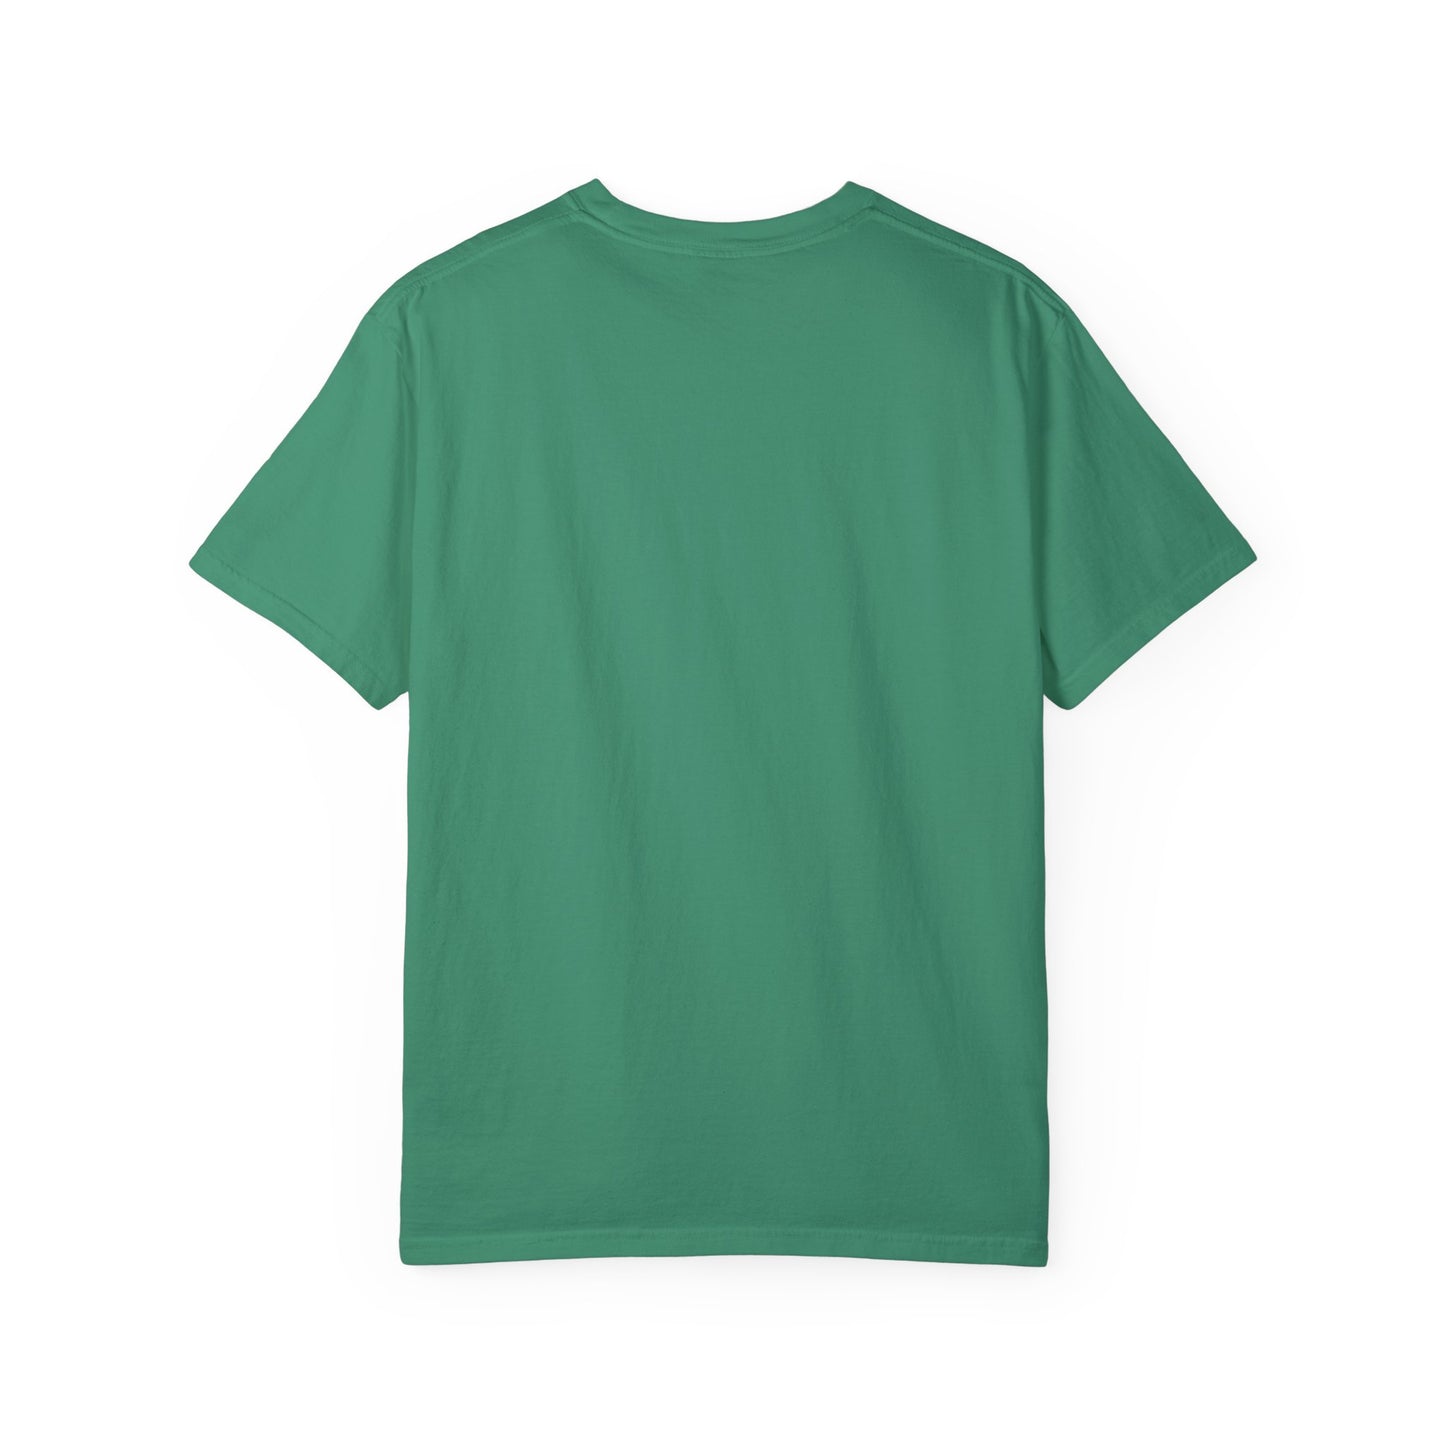 Unisex Comfort Colors T-shirt | Origin Trade Goods